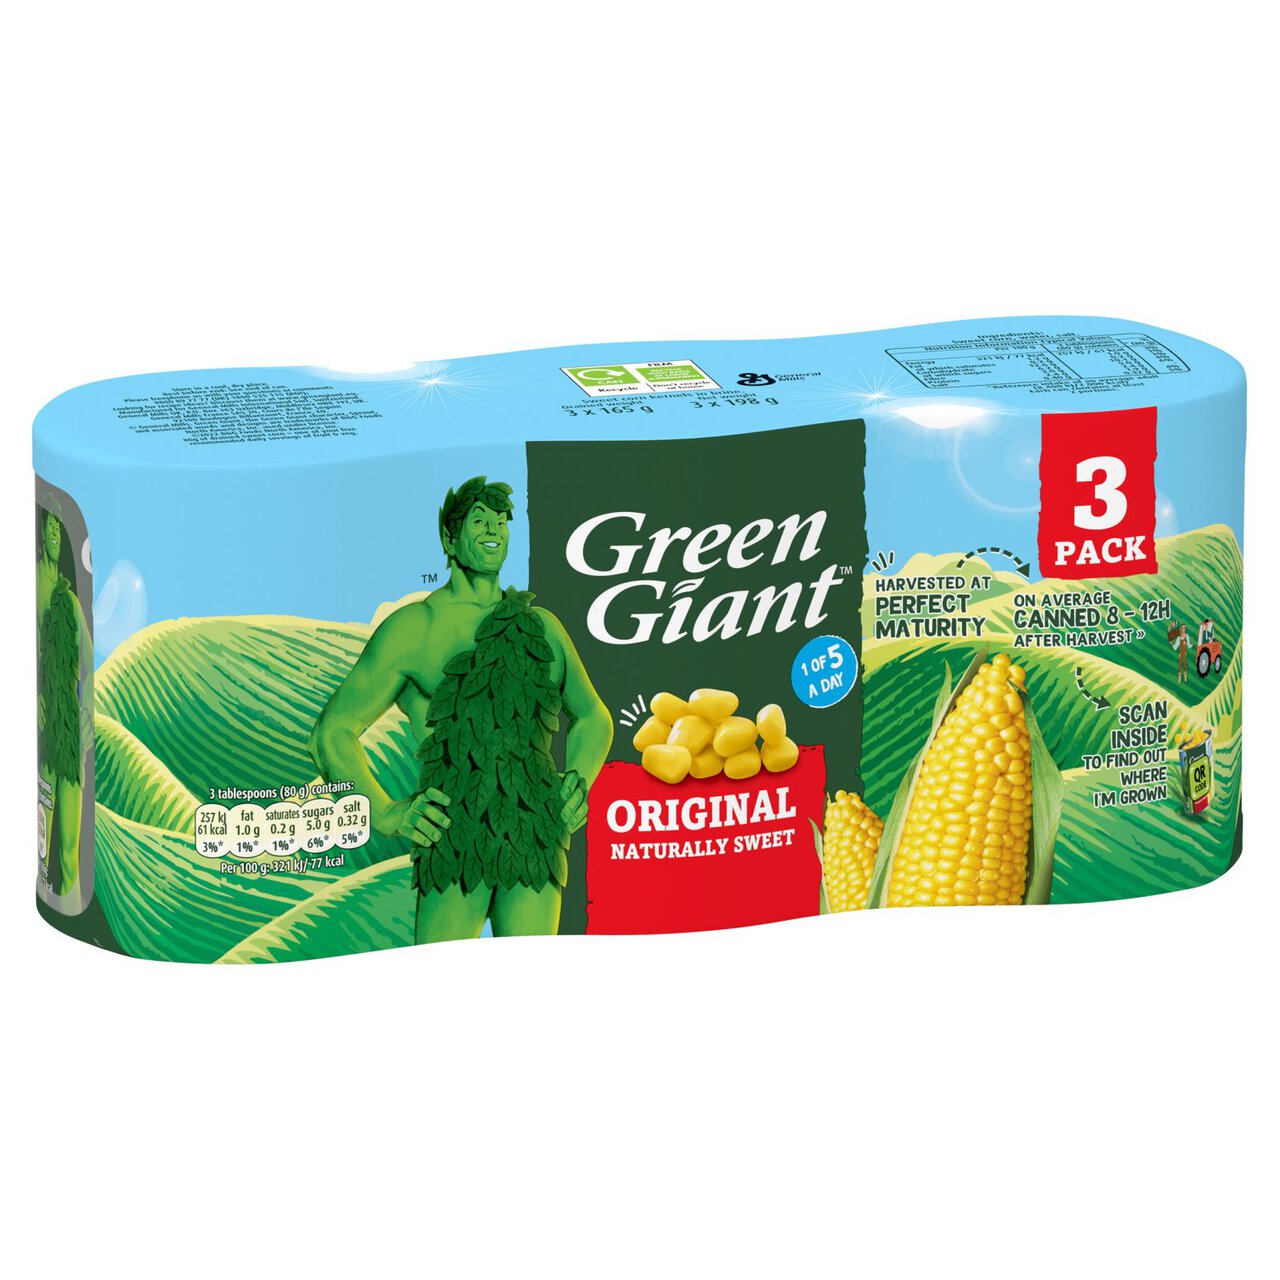 Green Giant Original Sweetcorn 3 x 198g